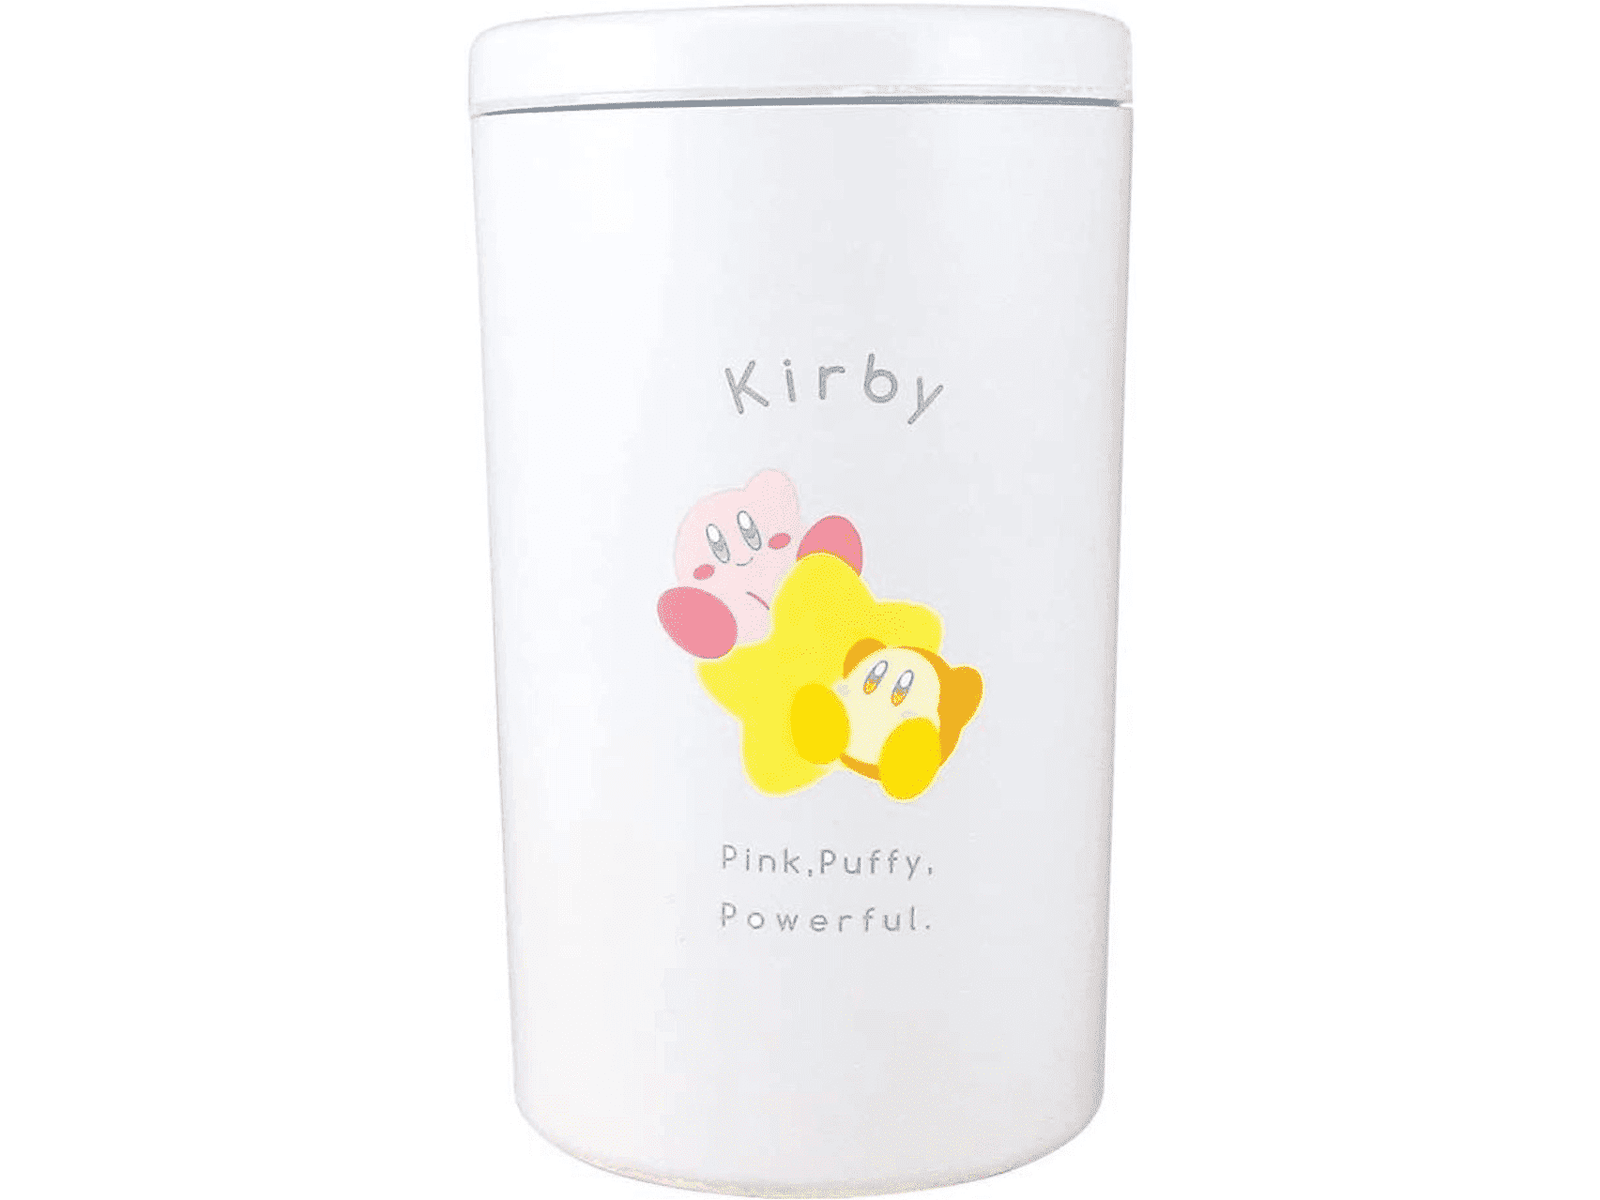 T's Factory Kirby Humidifier